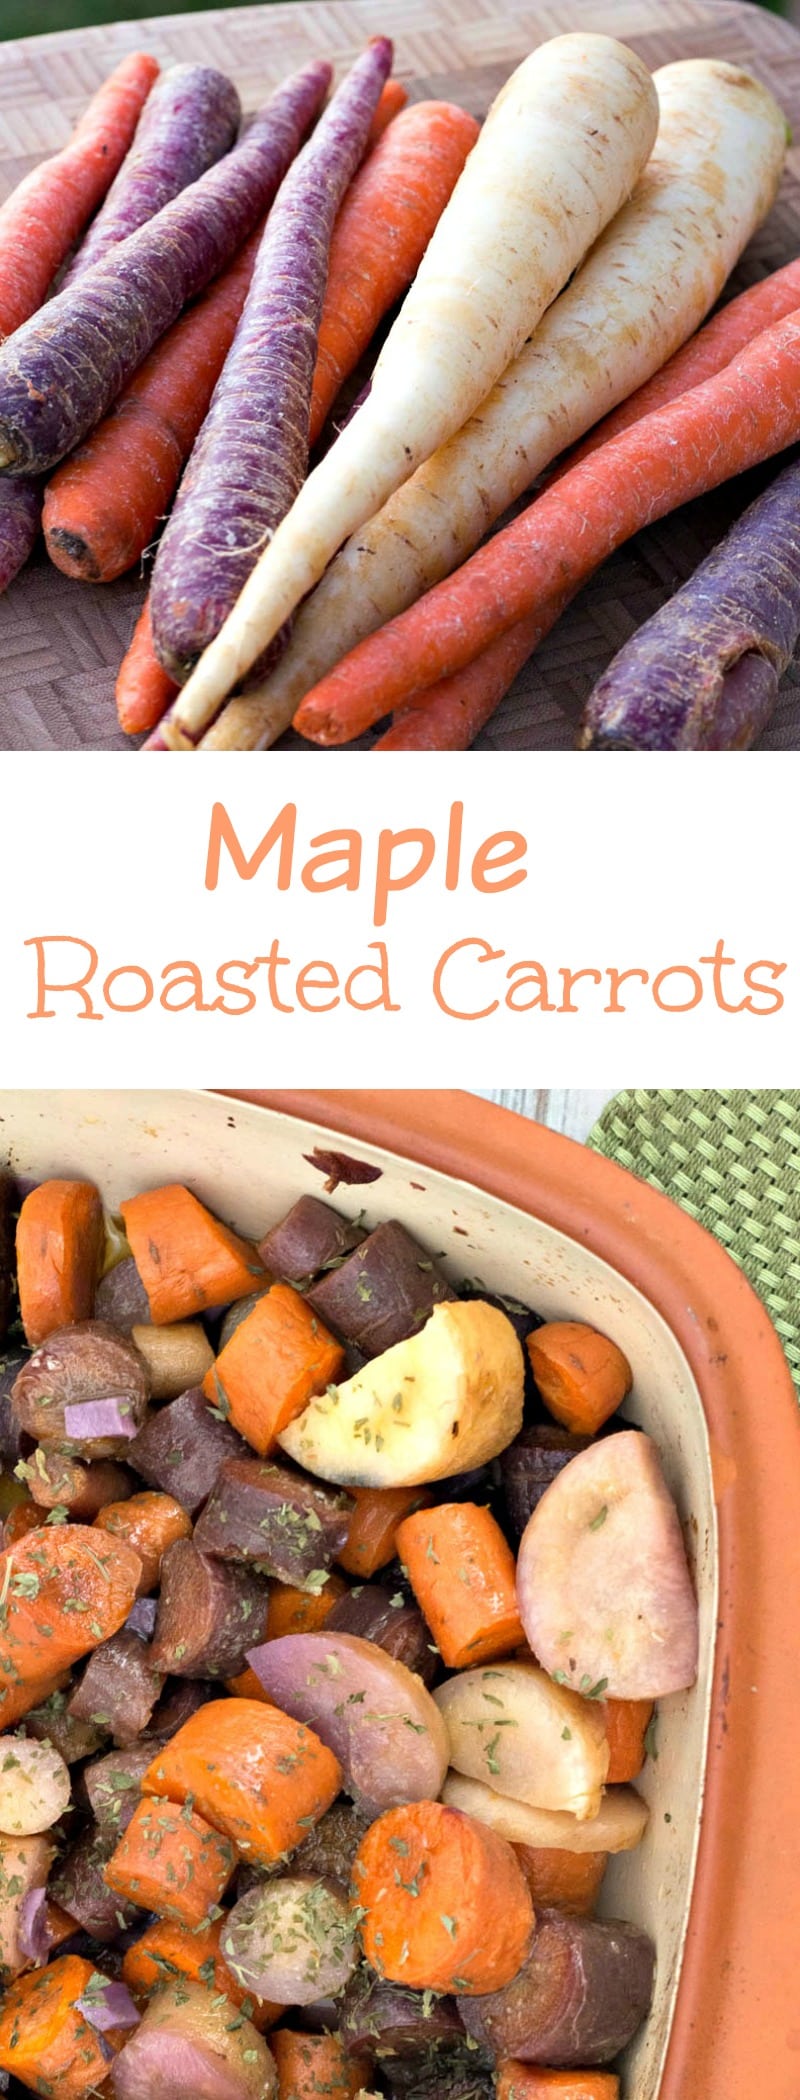 Maple-roasted carrots